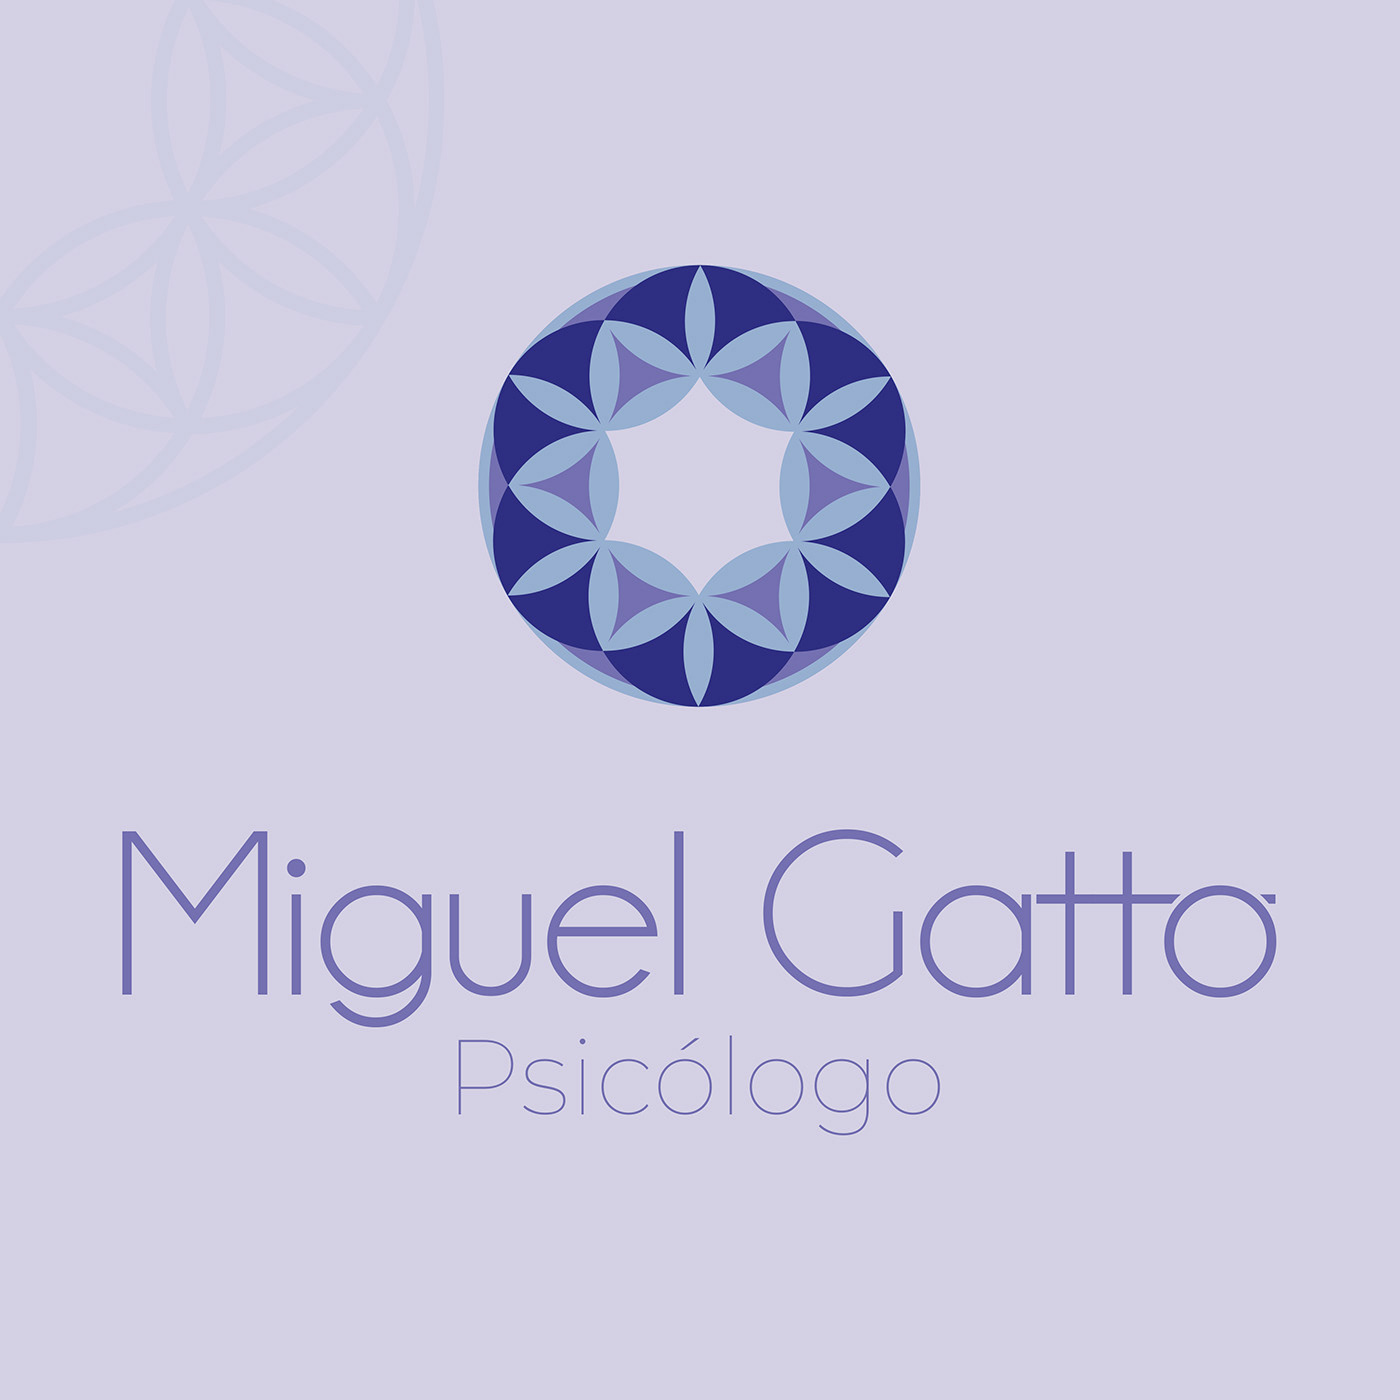 cartão identidade visual IDV logo psicologia psicologo